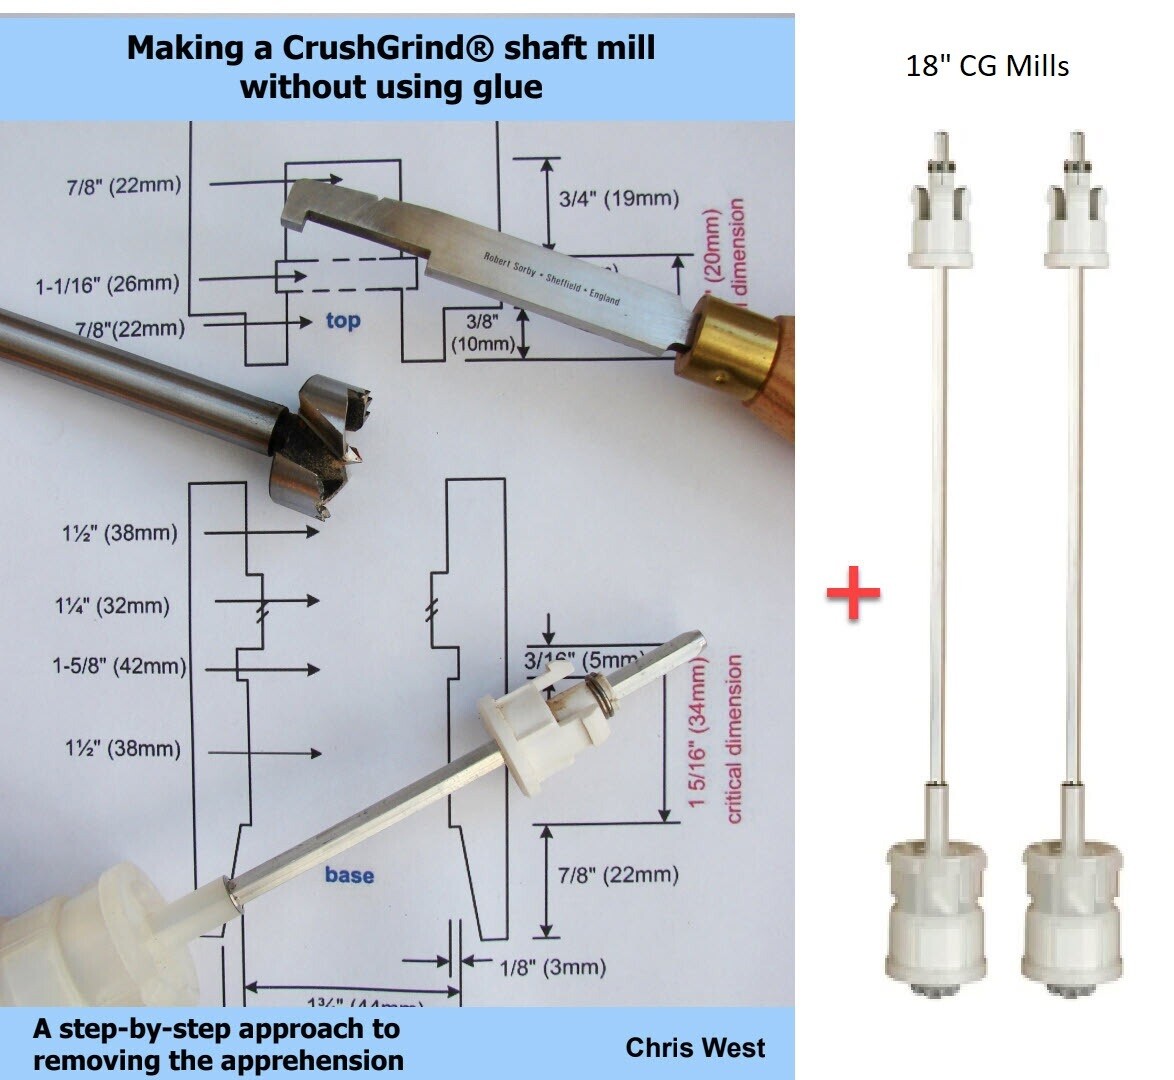 Crushgrind Starter Kit - Easily make a Pepper, Salt or Spice Mill without Glue (2 mills + Guide)